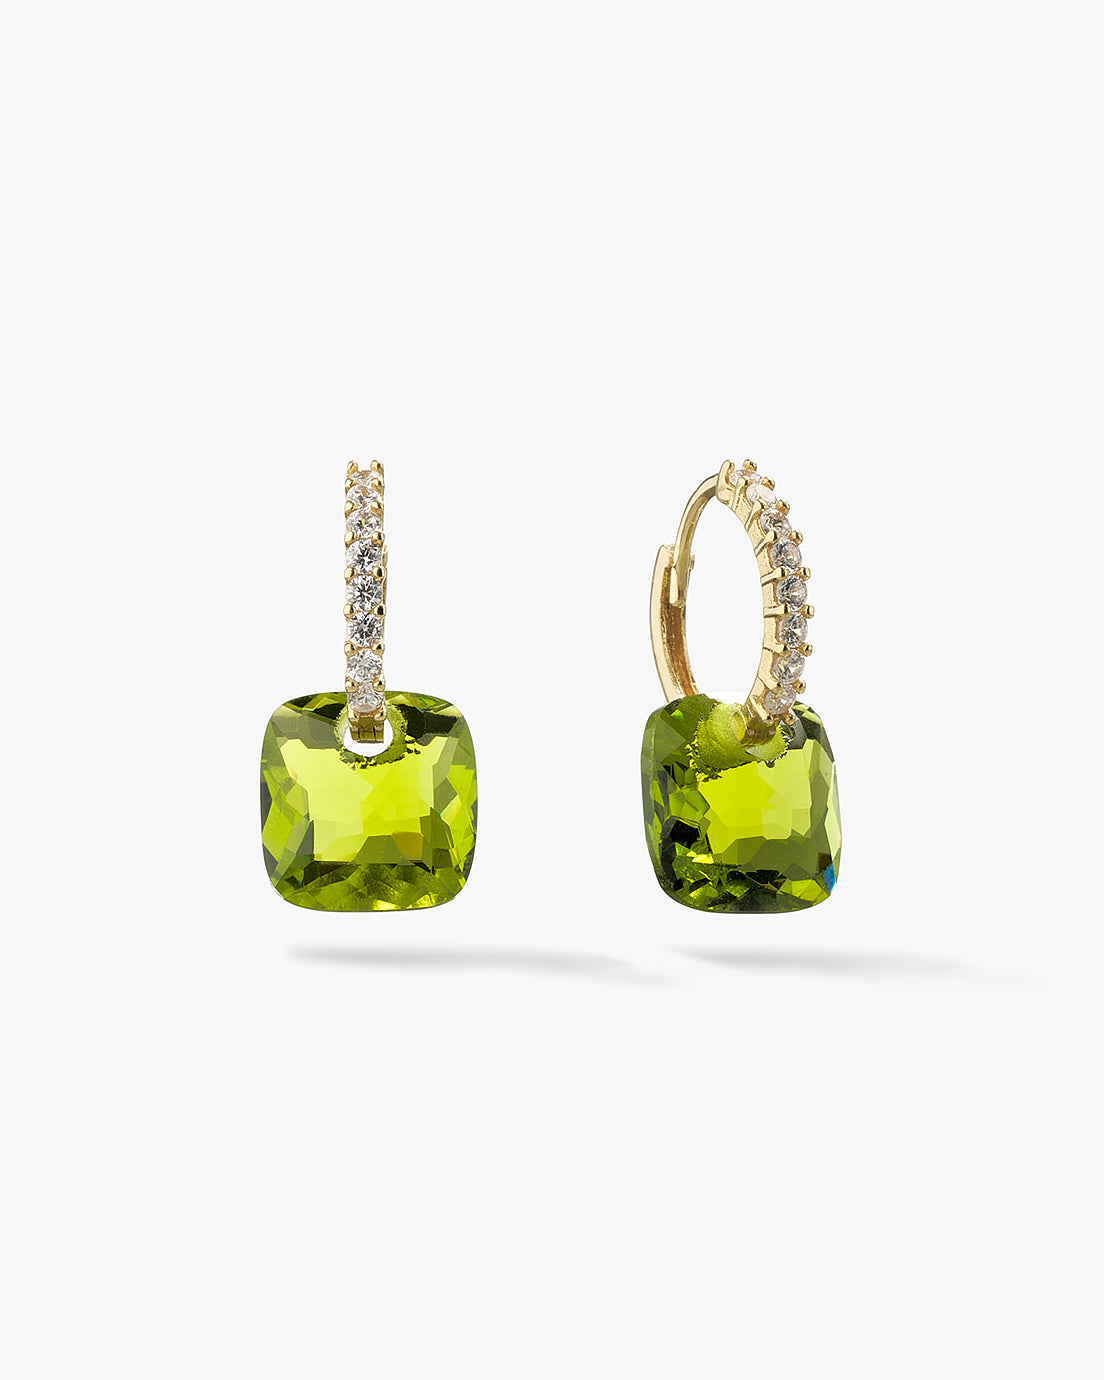 Gemstone Hoop Earrings - GioielliFazio